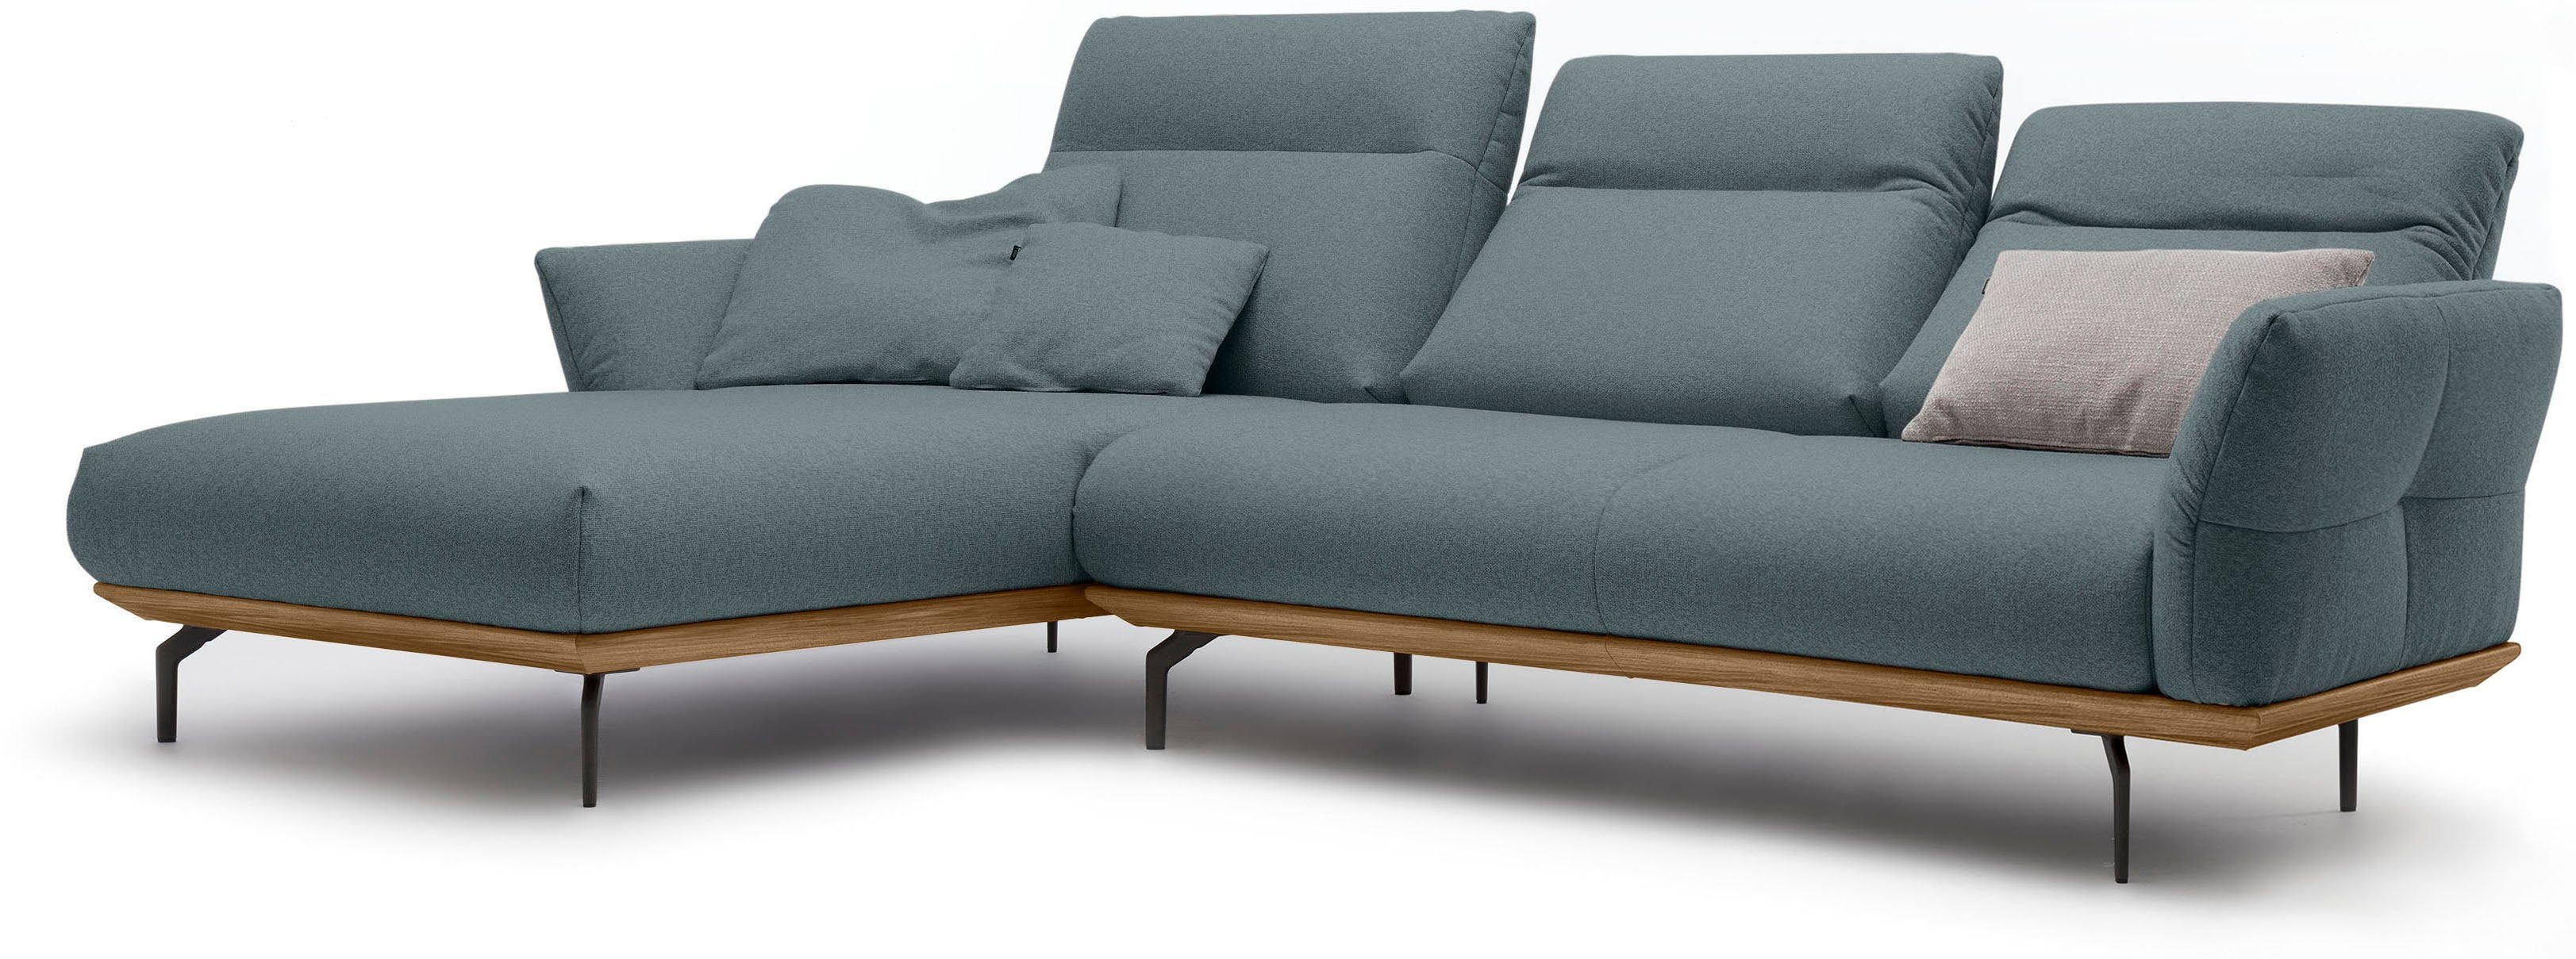 Breite sofa 298 in Ecksofa hs.460, hülsta Umbragrau, Winkelfüße Sockel cm Nussbaum, in